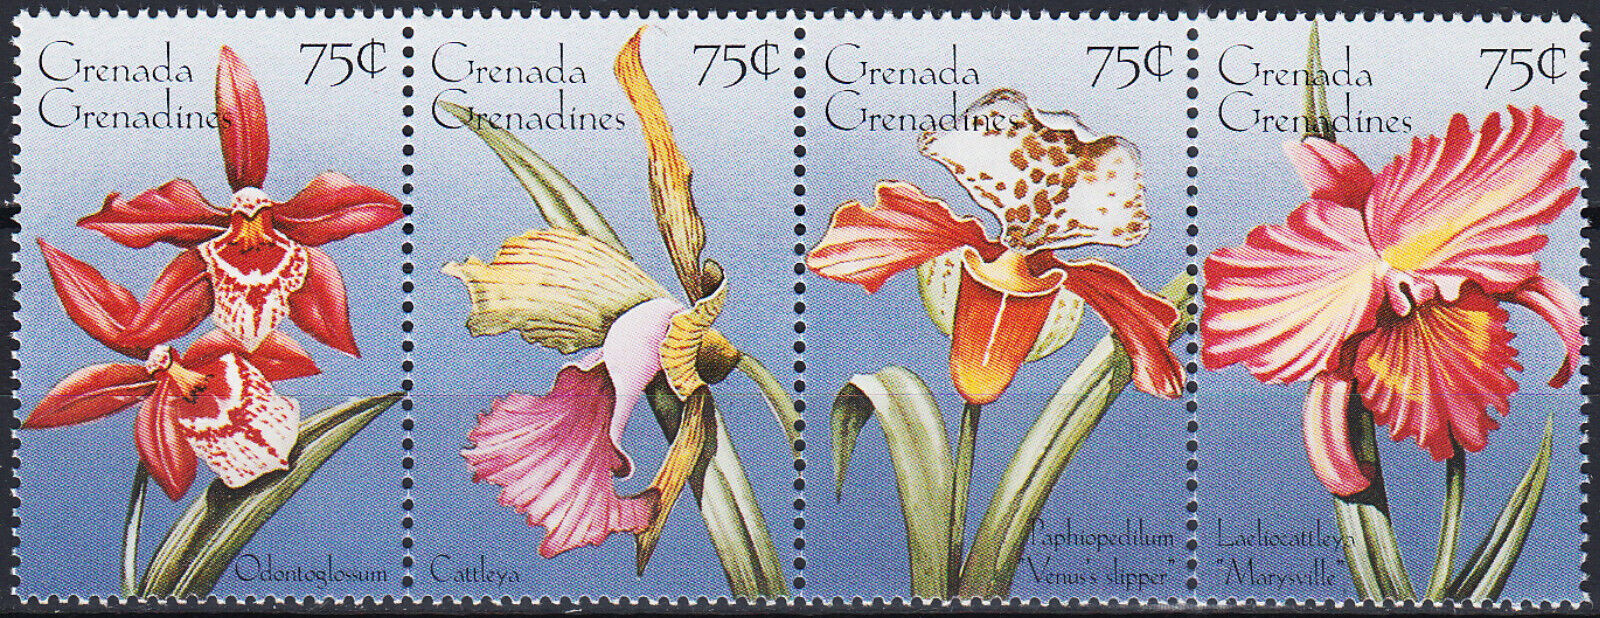 Grenada-gren Orchids 1996 Mnh-4 Euro